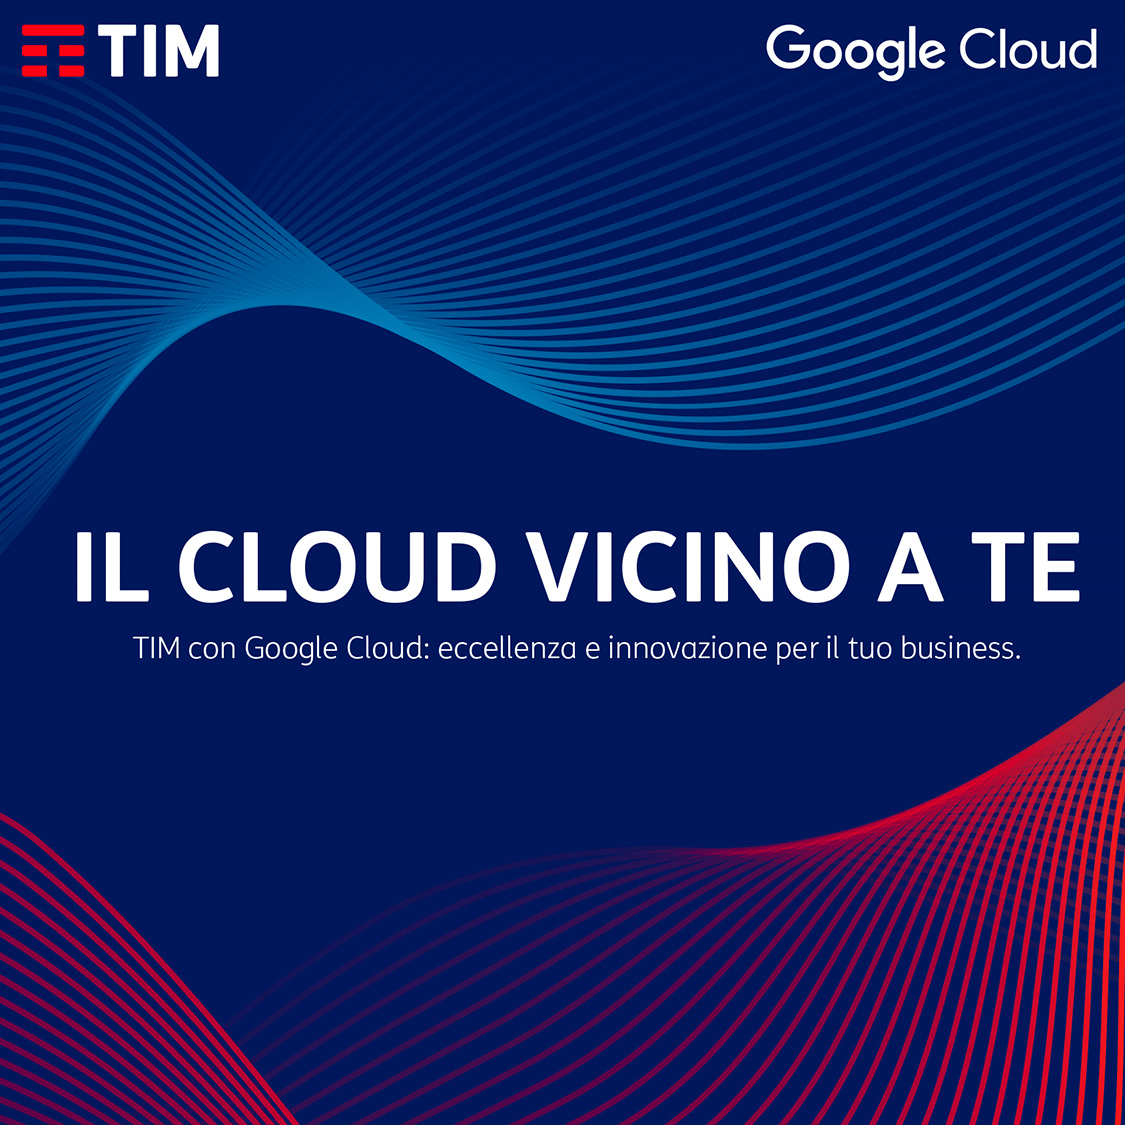 TIM con Google Cloud